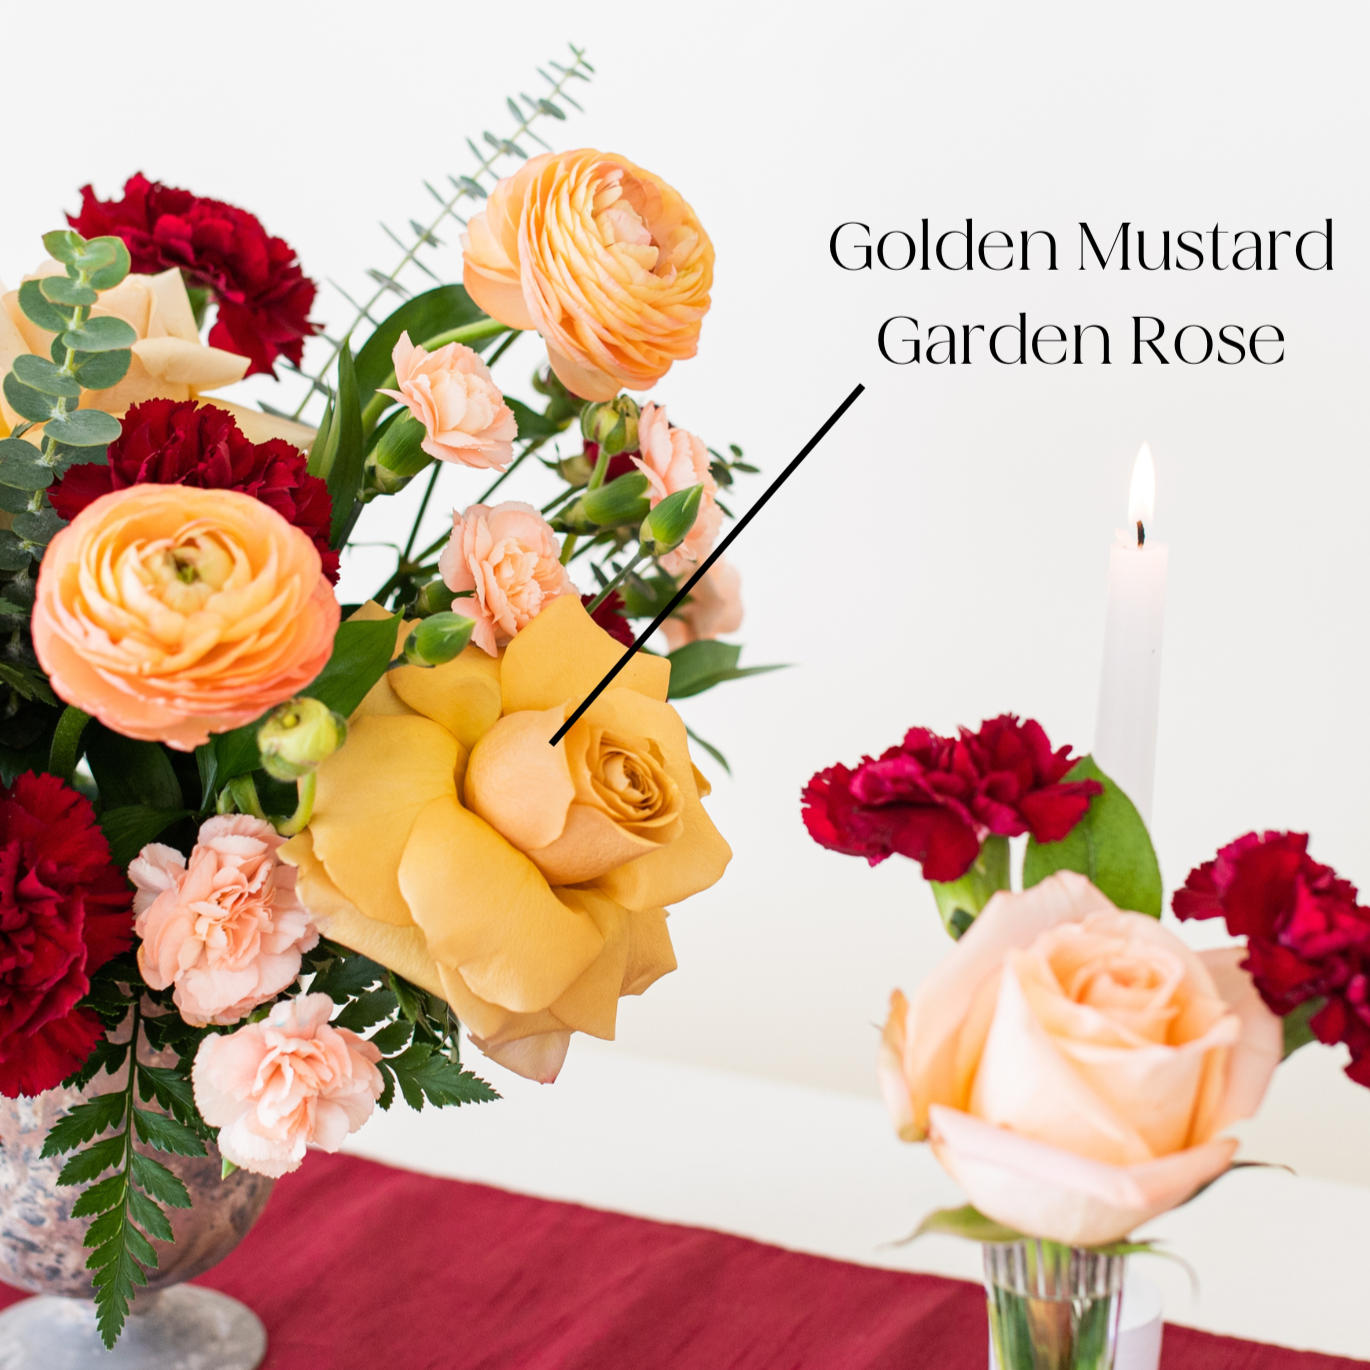 Golden Mustard Garden Rose